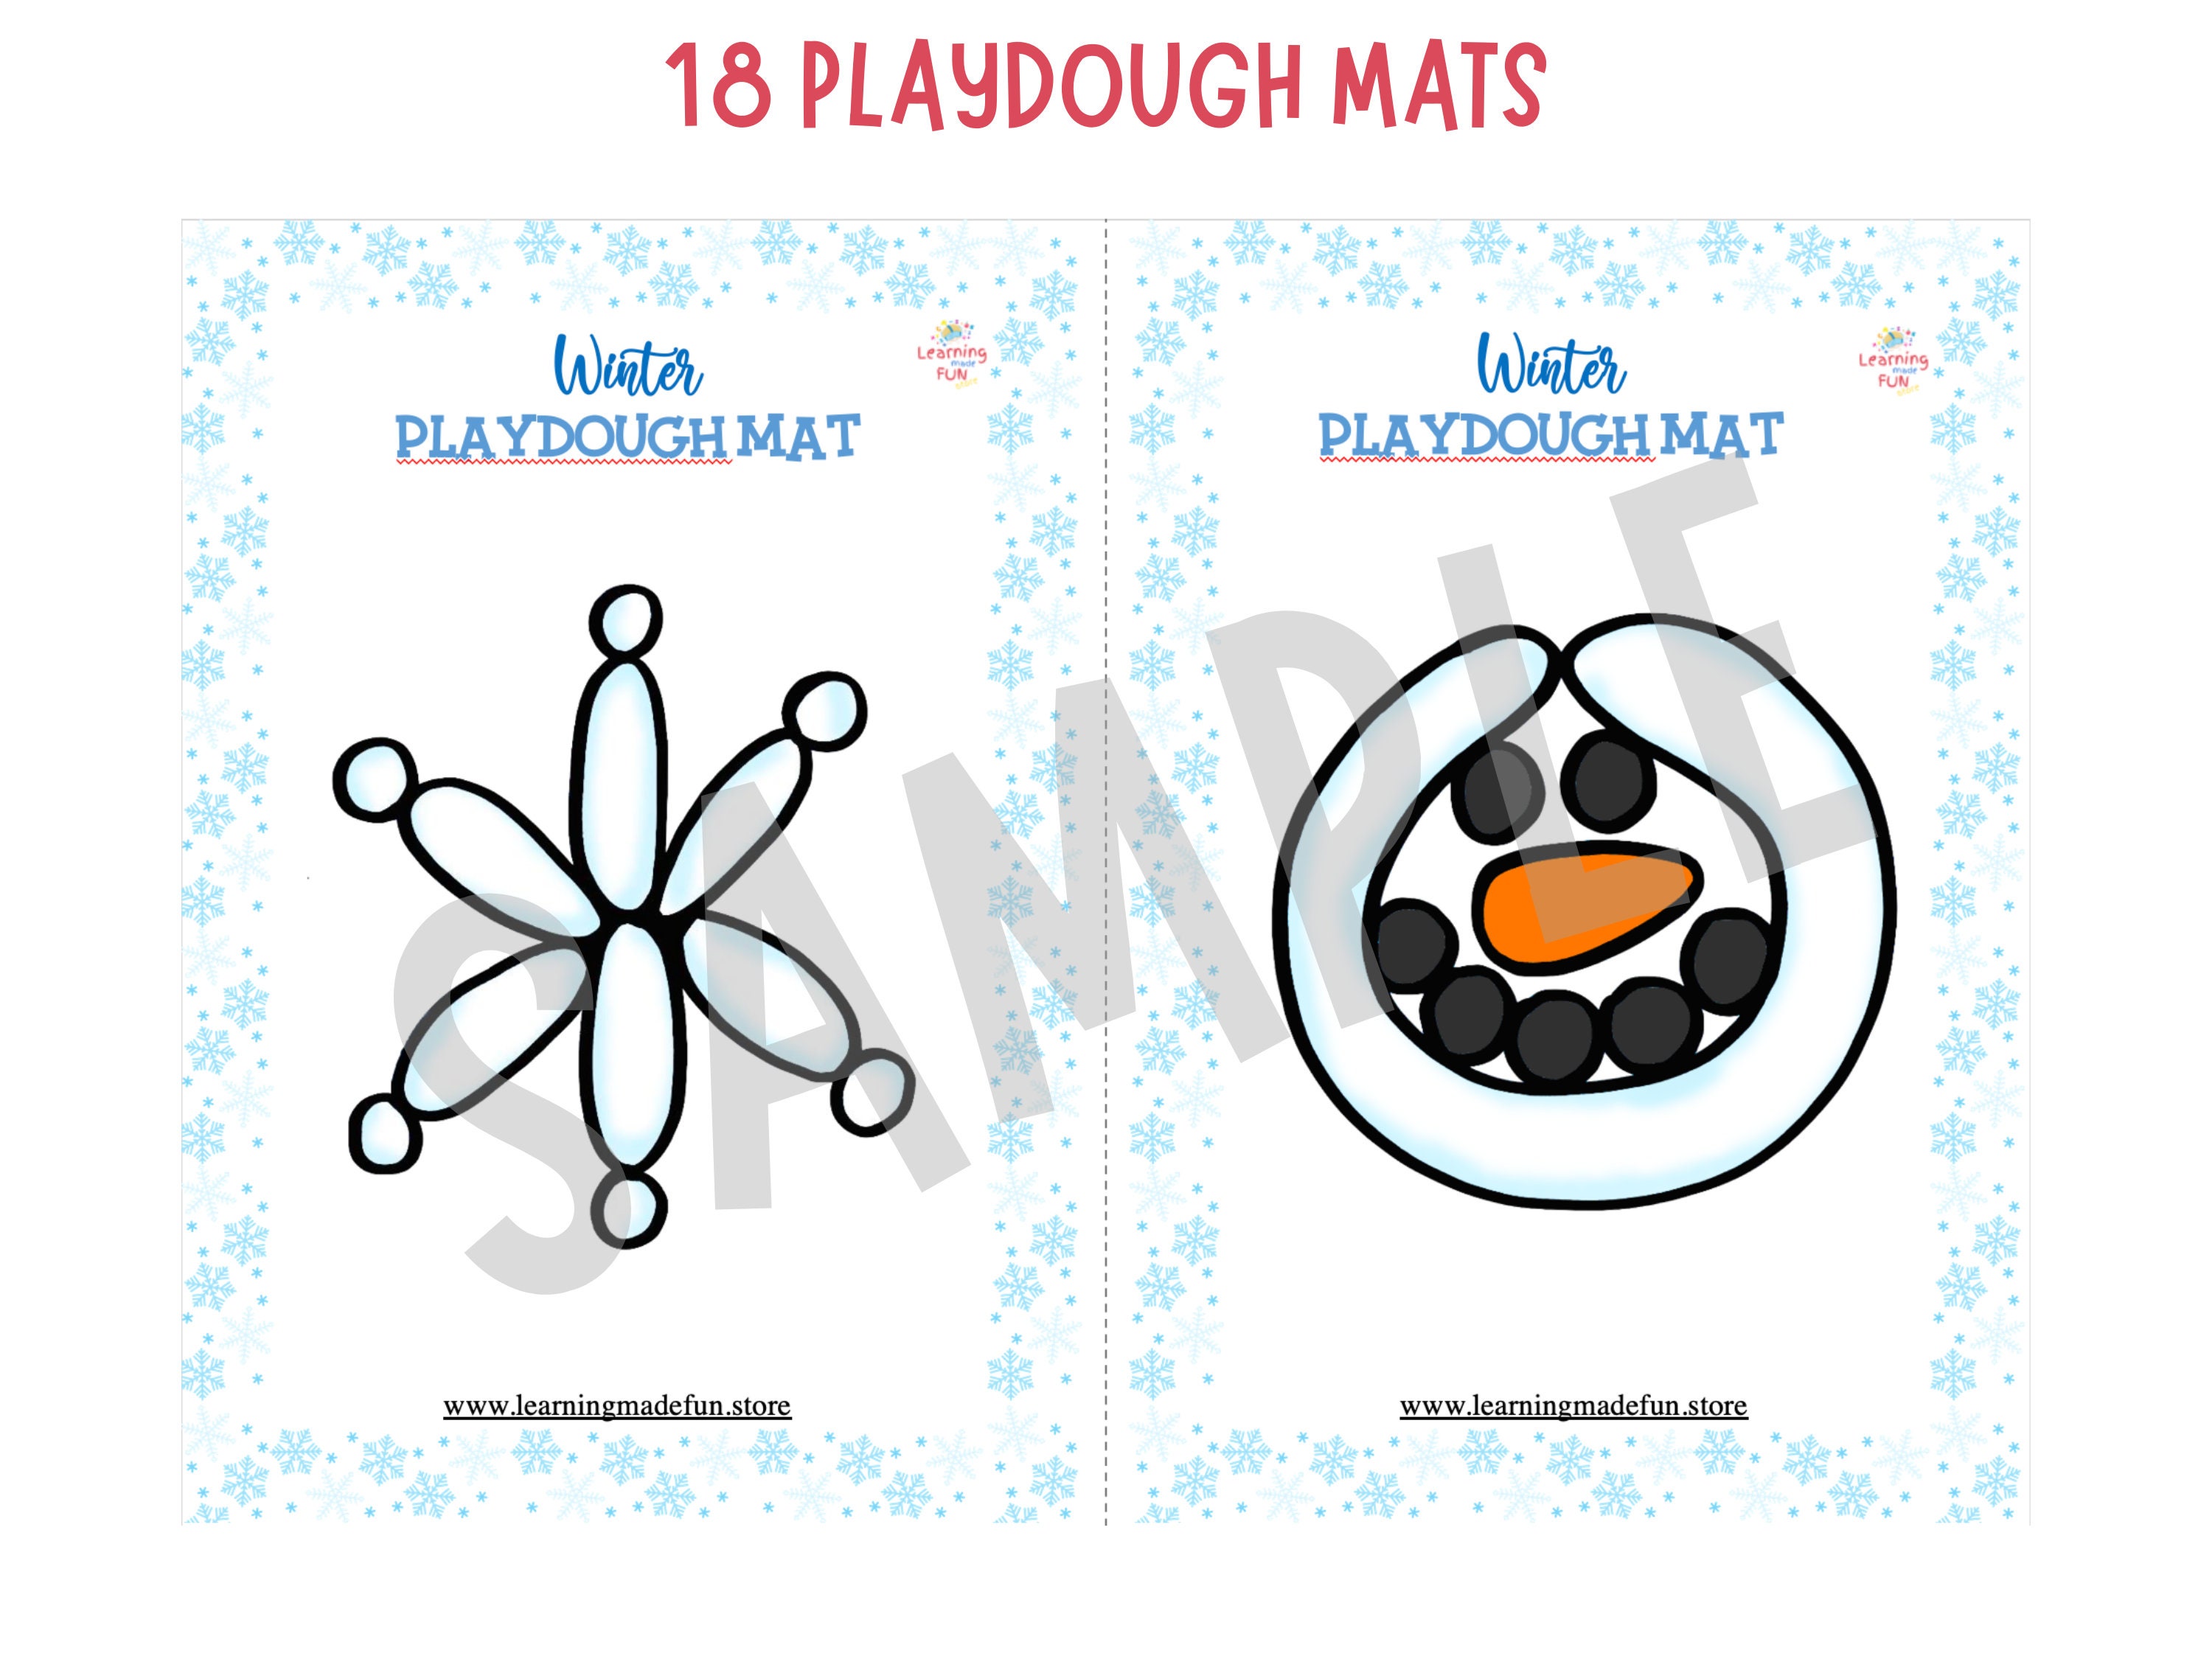 Nativity Play Dough Mats, Printable Play Doh, Visual Cards, Christmas  Toddler Quiet Time, Busy Bags, Kindergarten Pre-k, Fine Motor Skills. -   Denmark